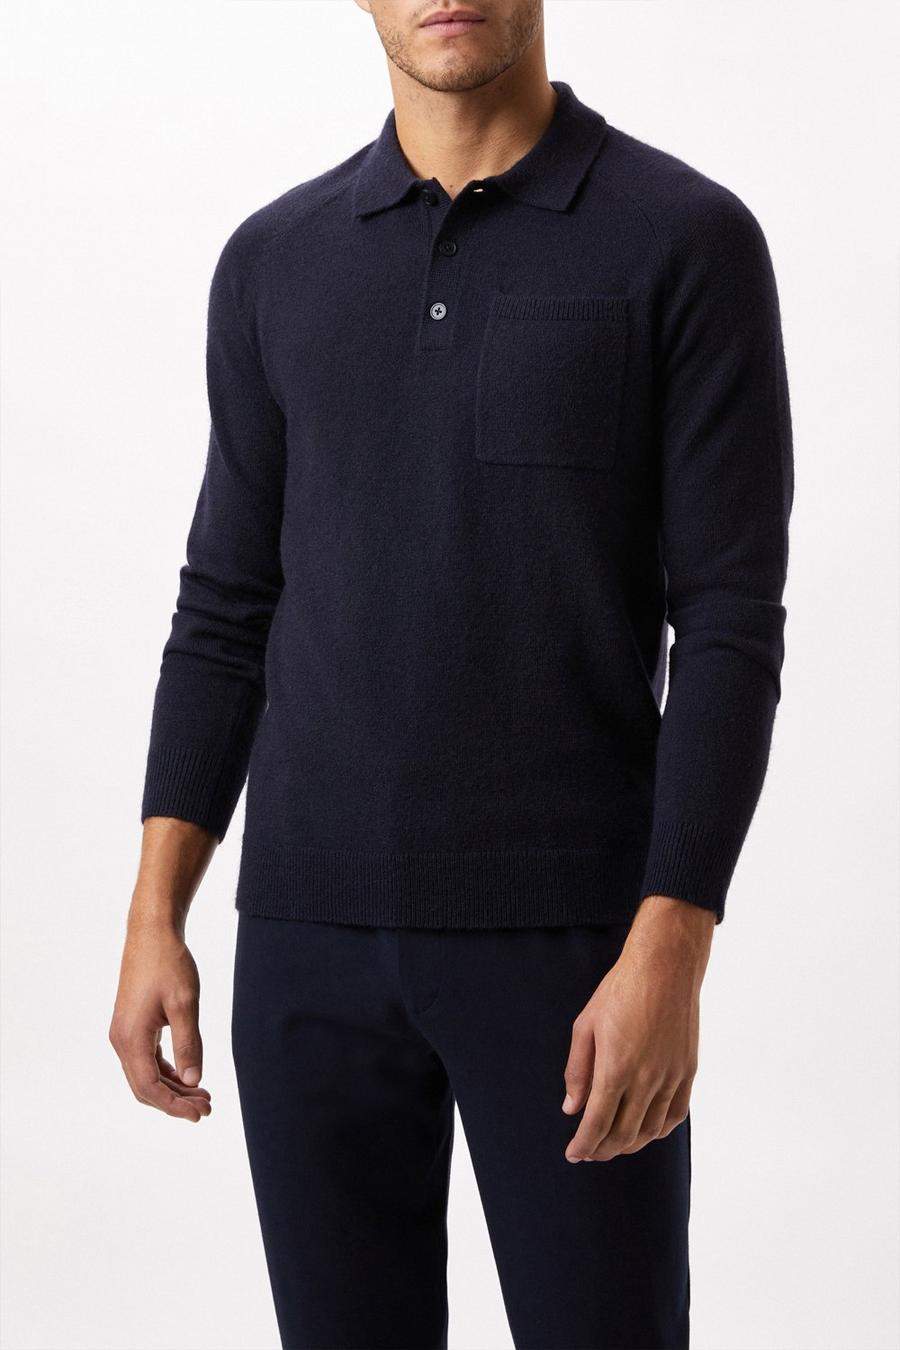 Super Soft Navy Knitted Pocket Raglan Polo Shirt